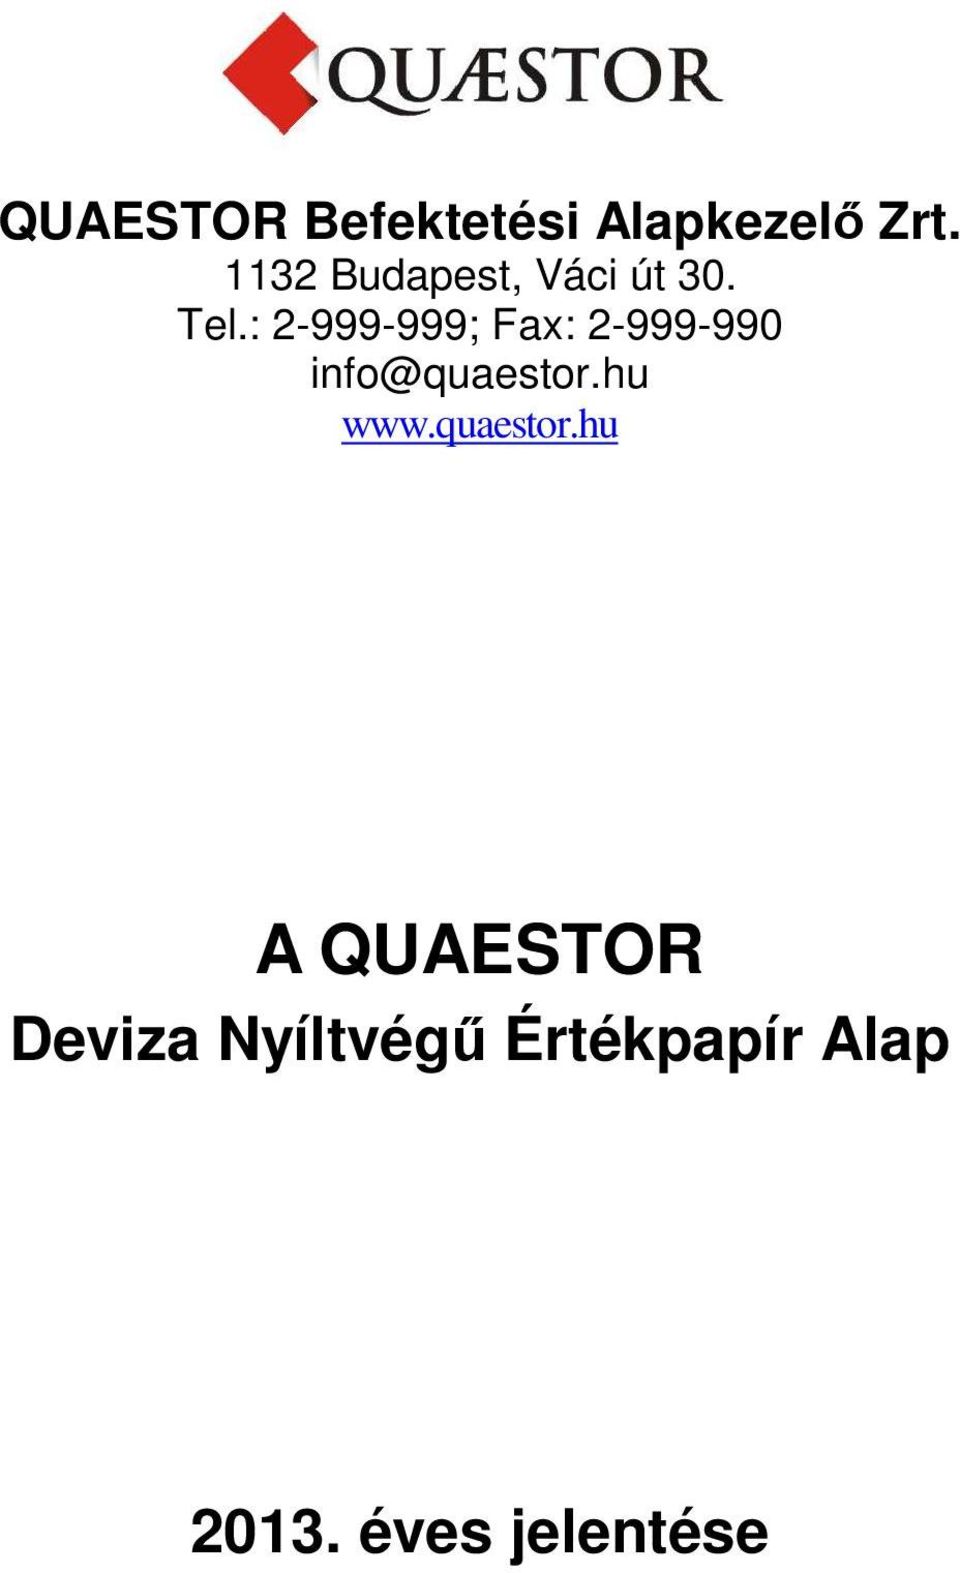 : 2-999-999; Fax: 2-999-990 info@quaestor.